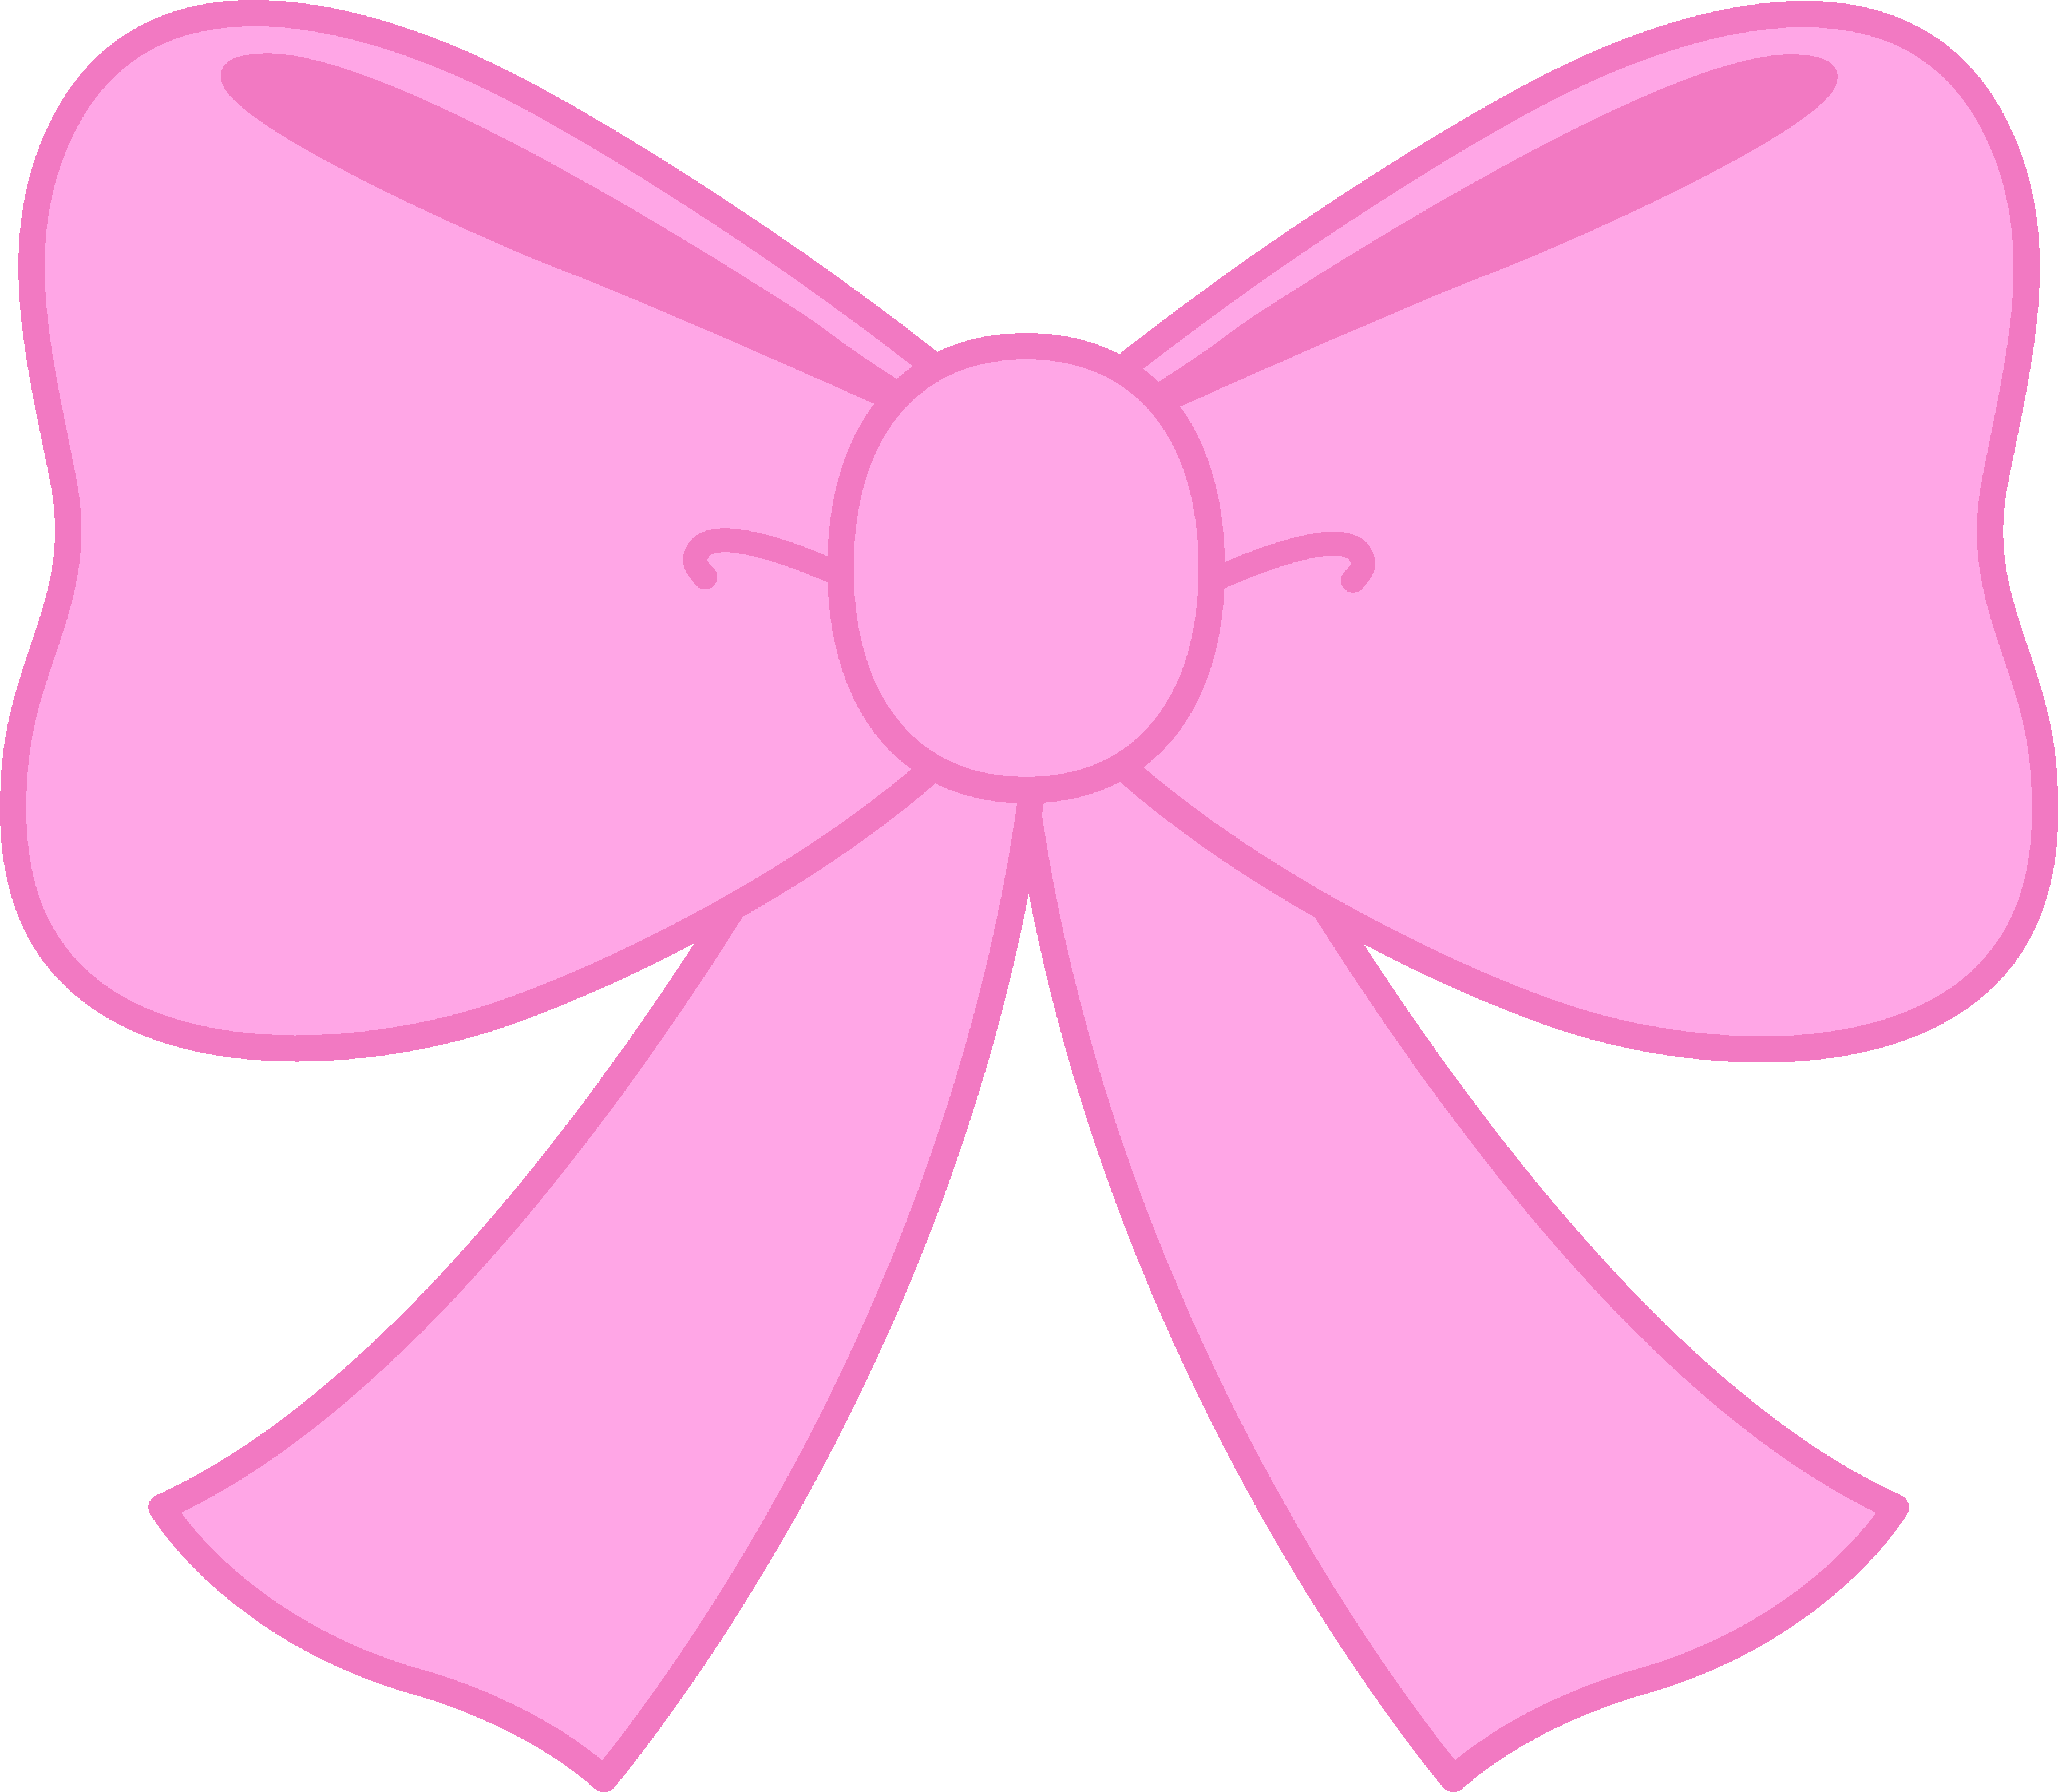 Cute pink bow clipart free clip art